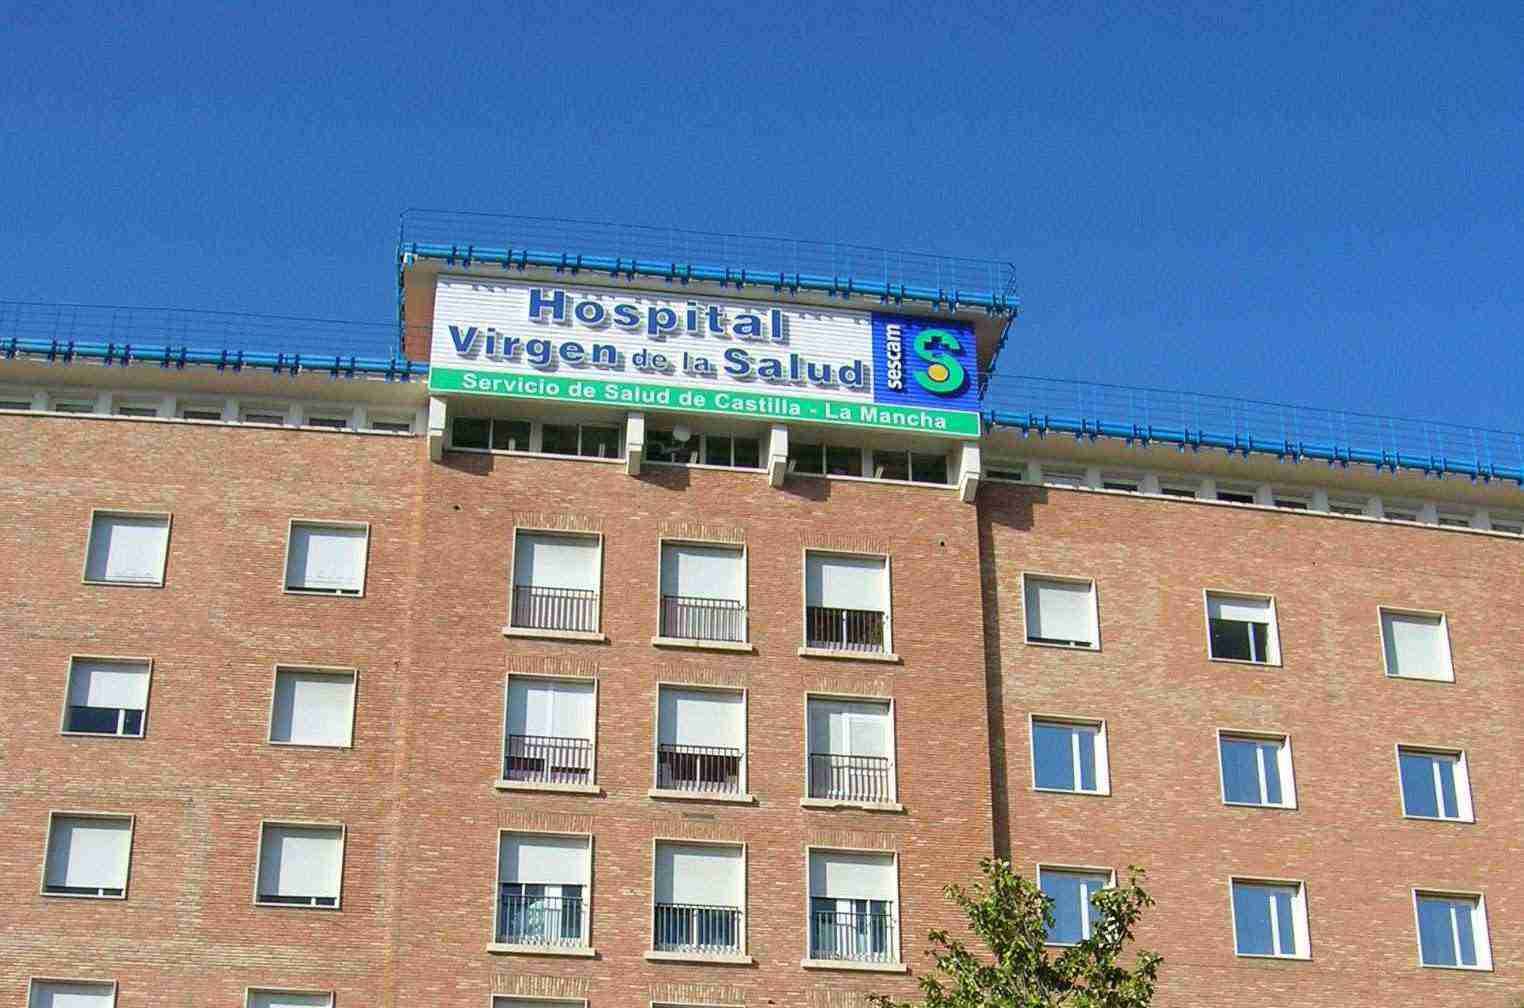 Hospital Virgen de la Salud en Toledo